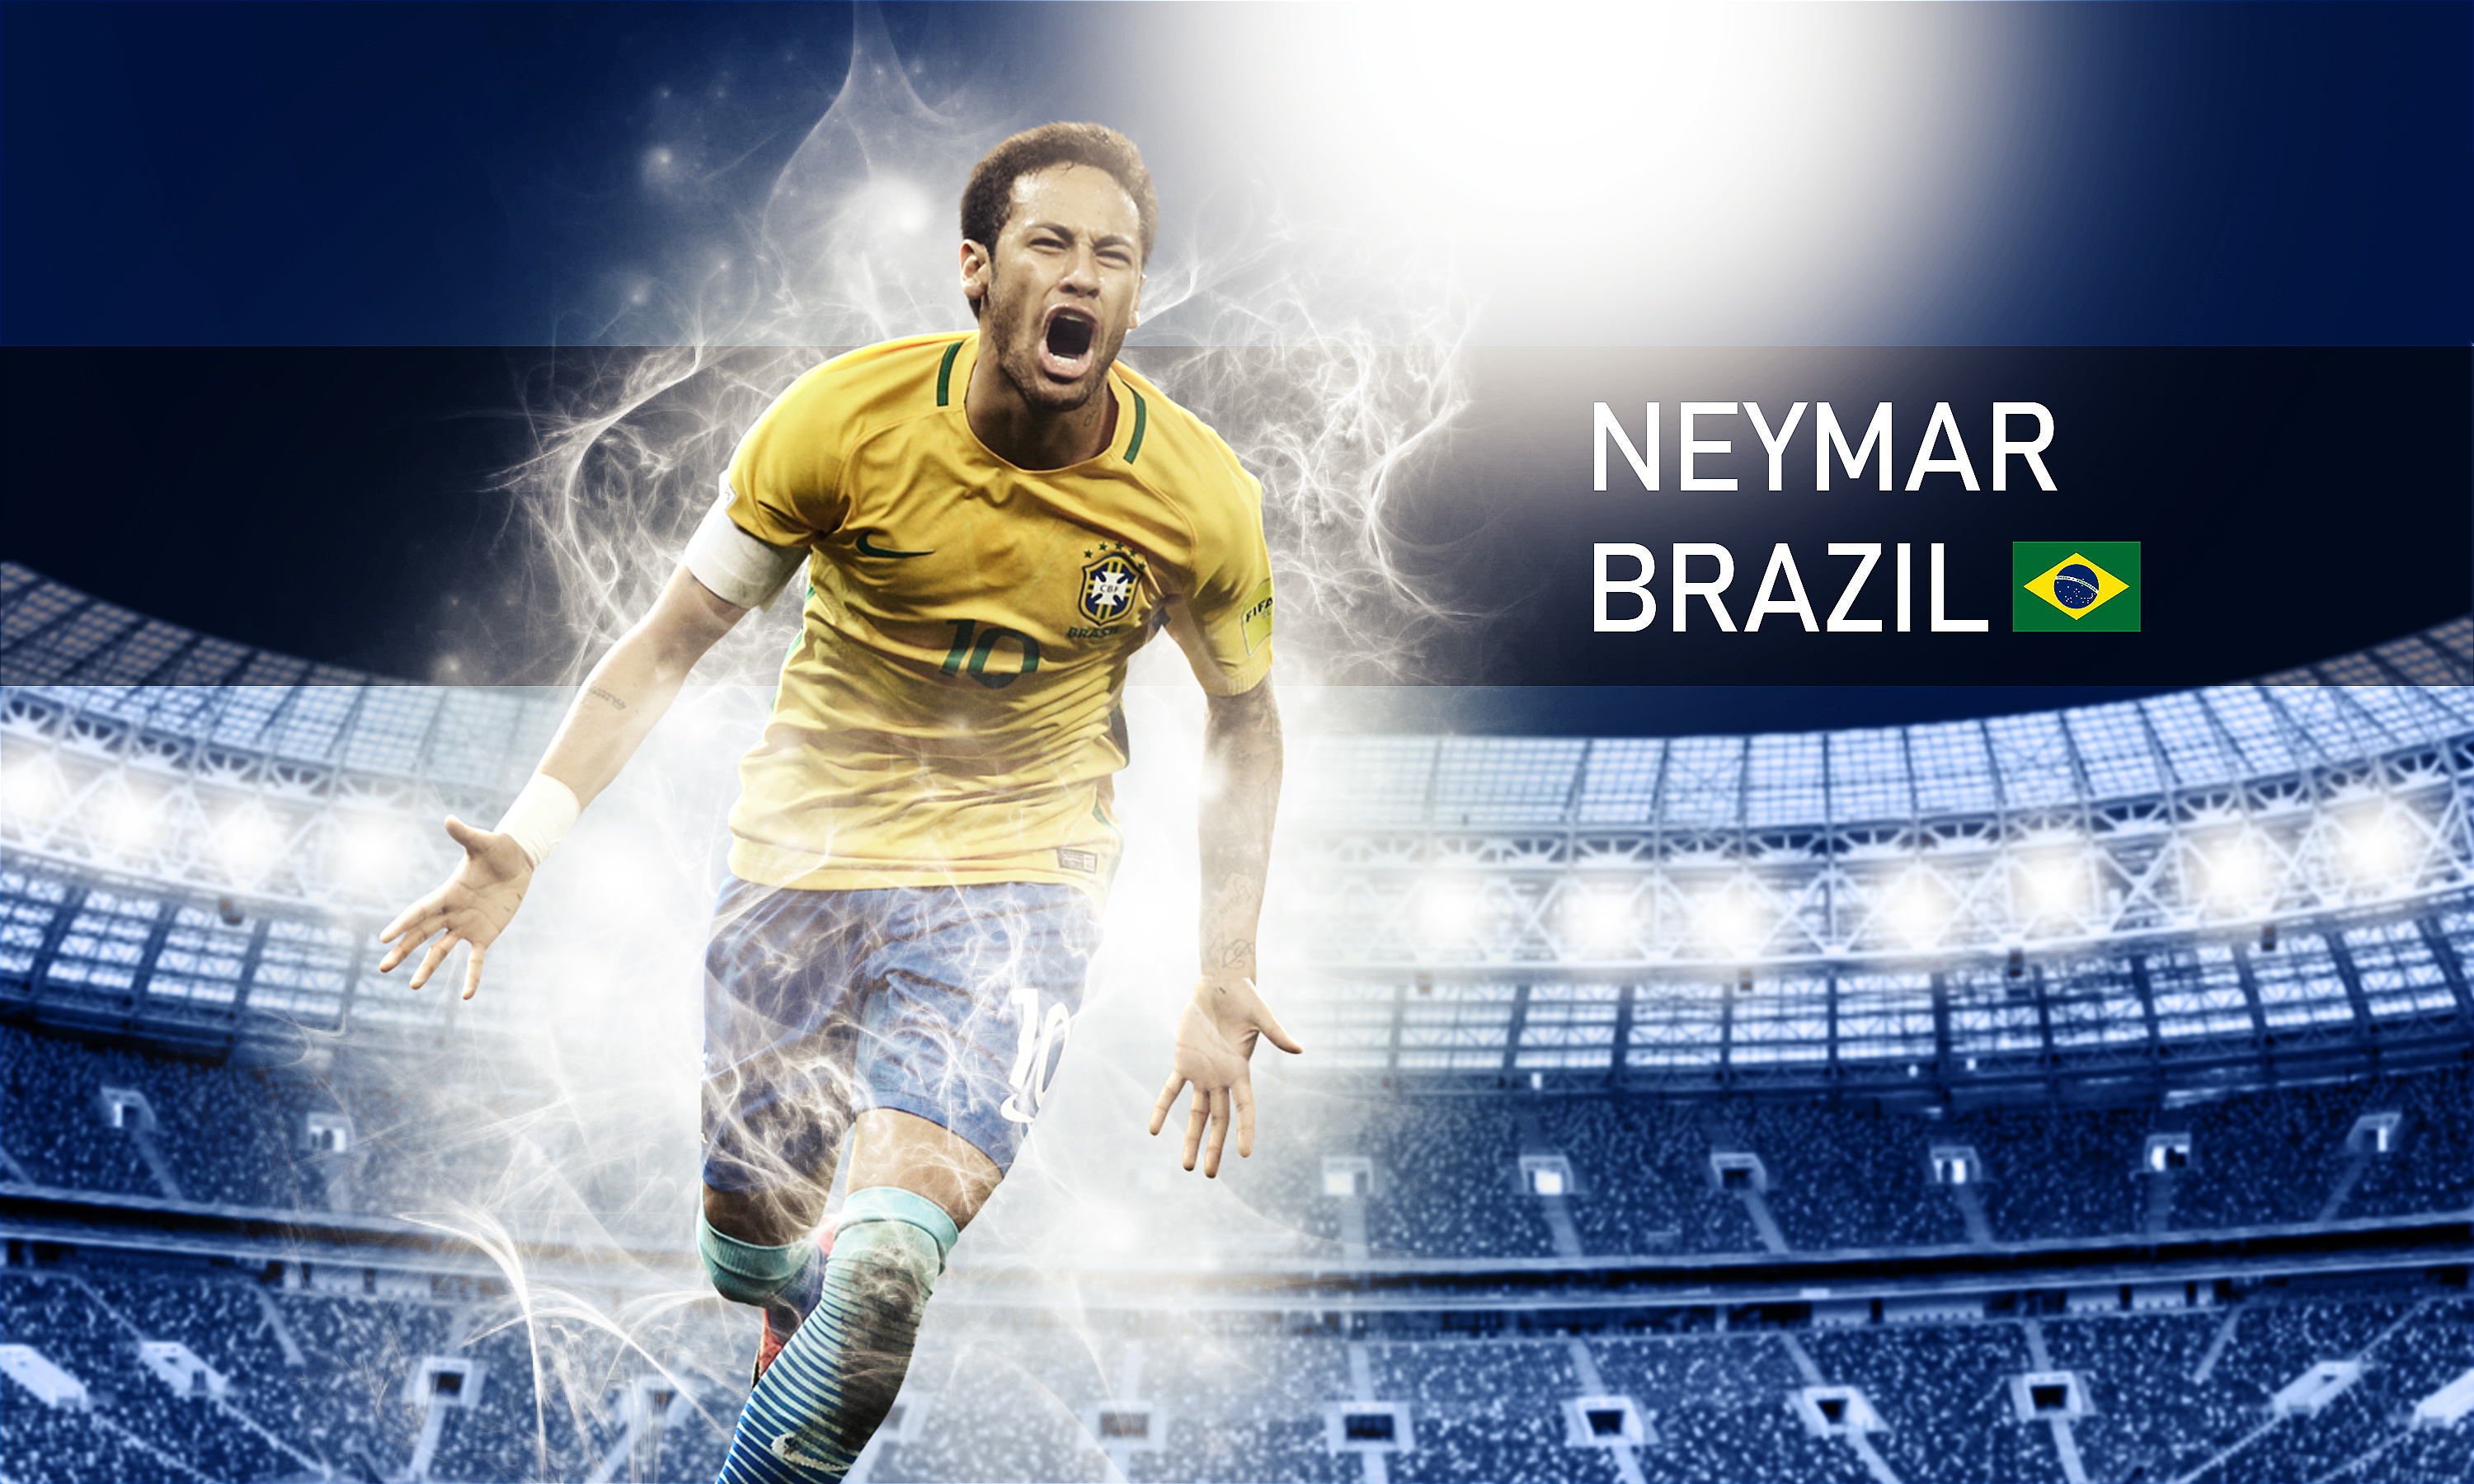 neymar wallpaper,football player,product,player,sport venue,soccer player